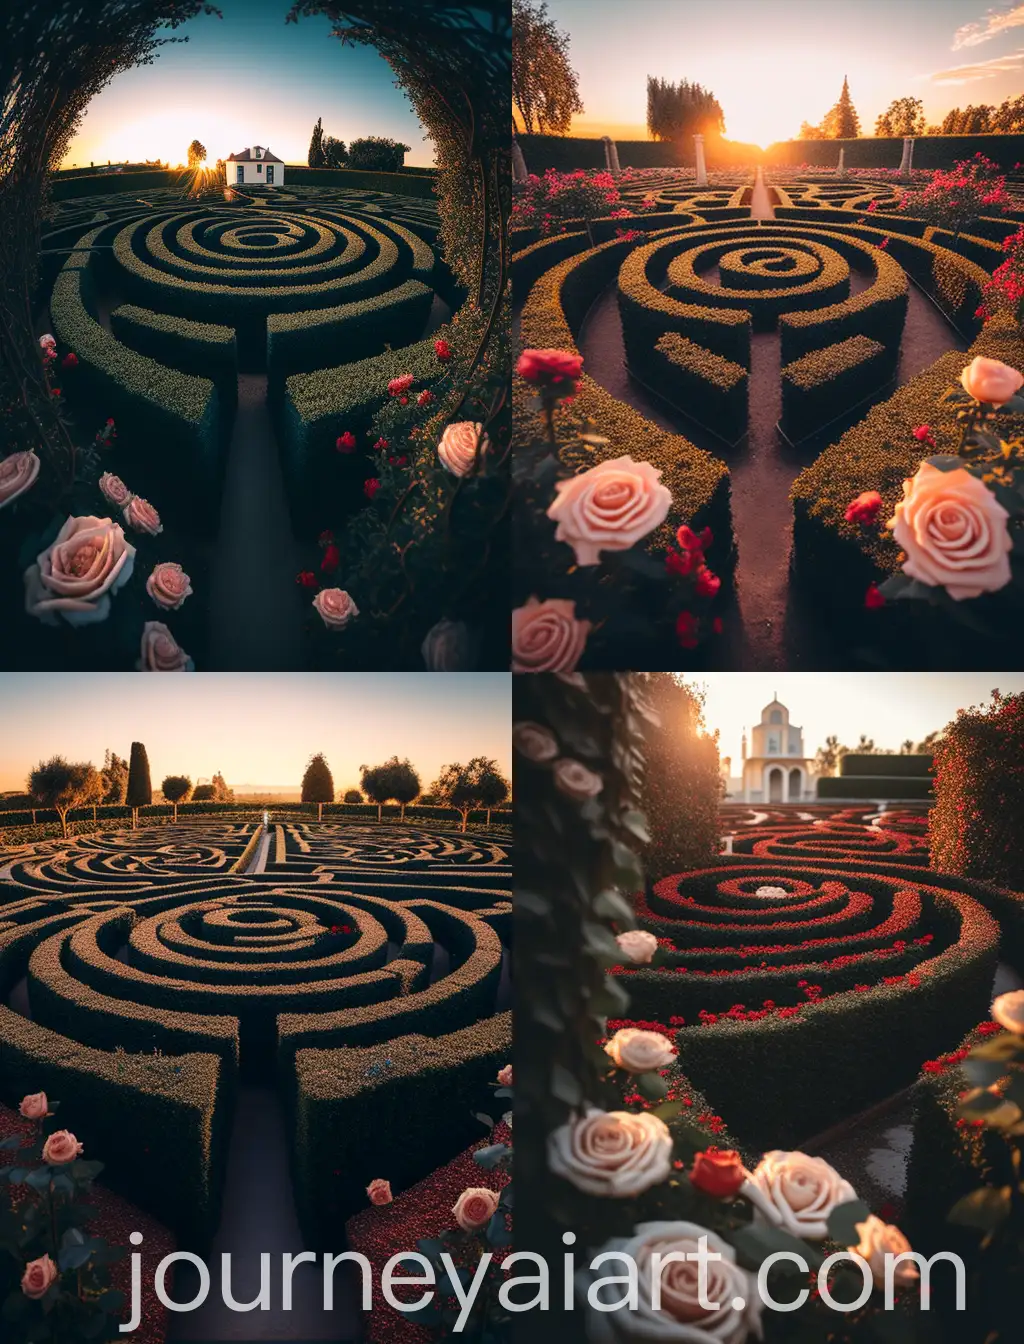 Enchanting-Rose-Garden-Maze-at-Dawn-or-Dusk